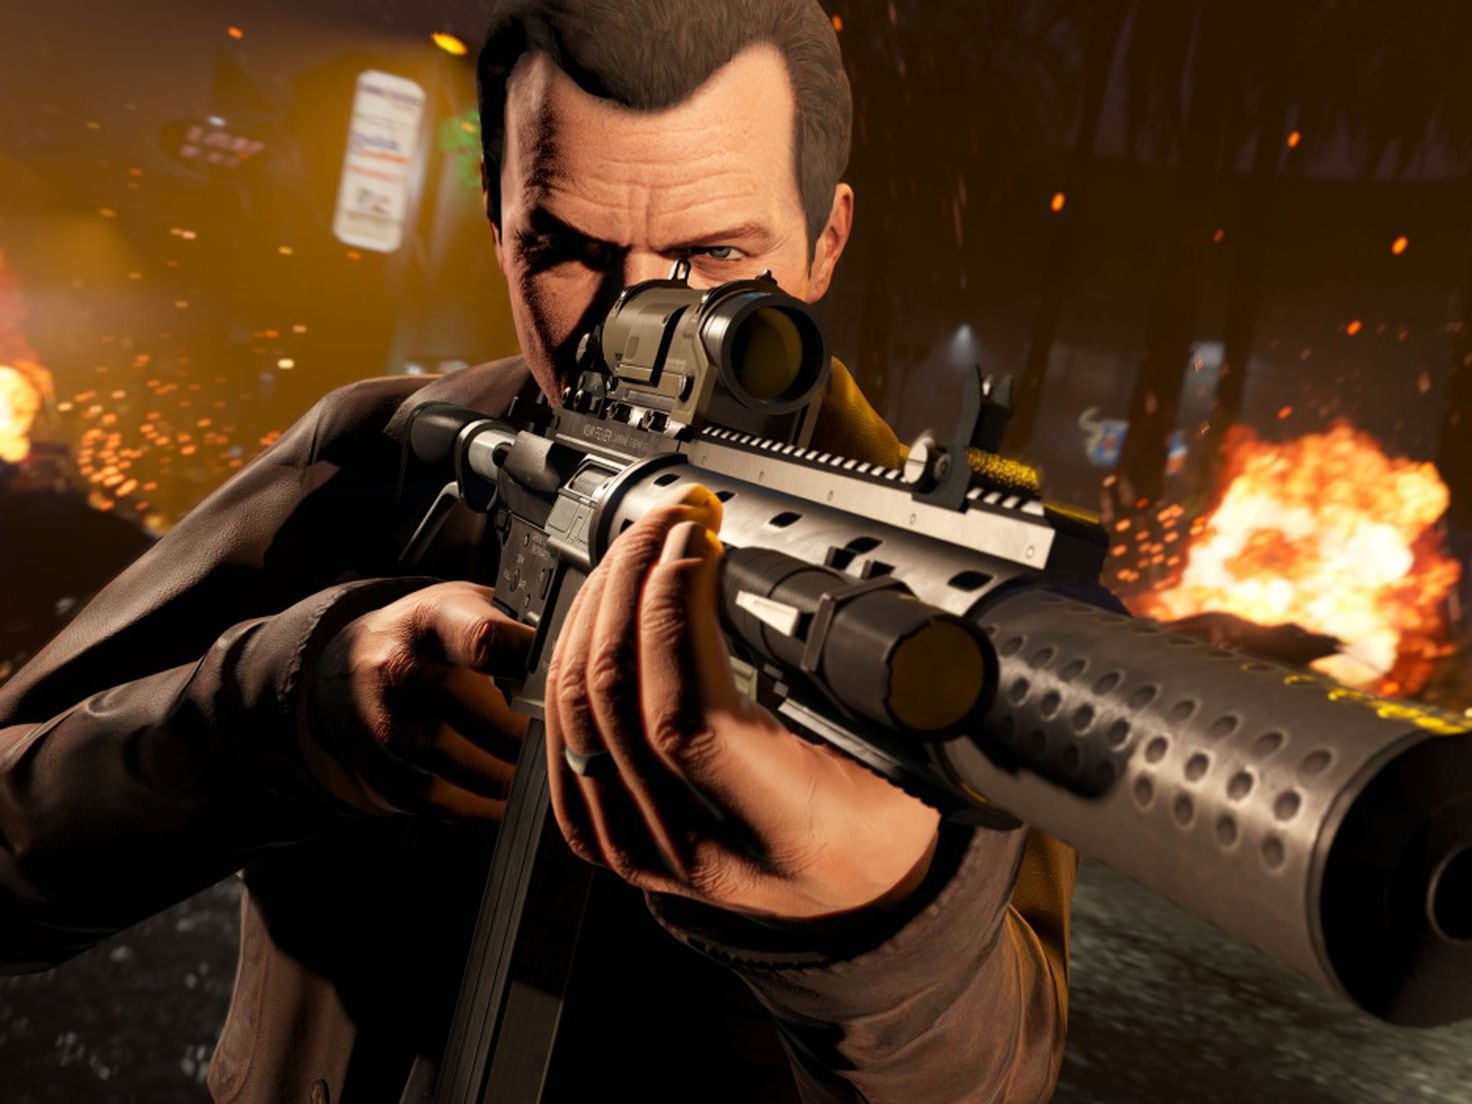 Rockstar gives away custom GTA 5-themed PS4 and Xbox One